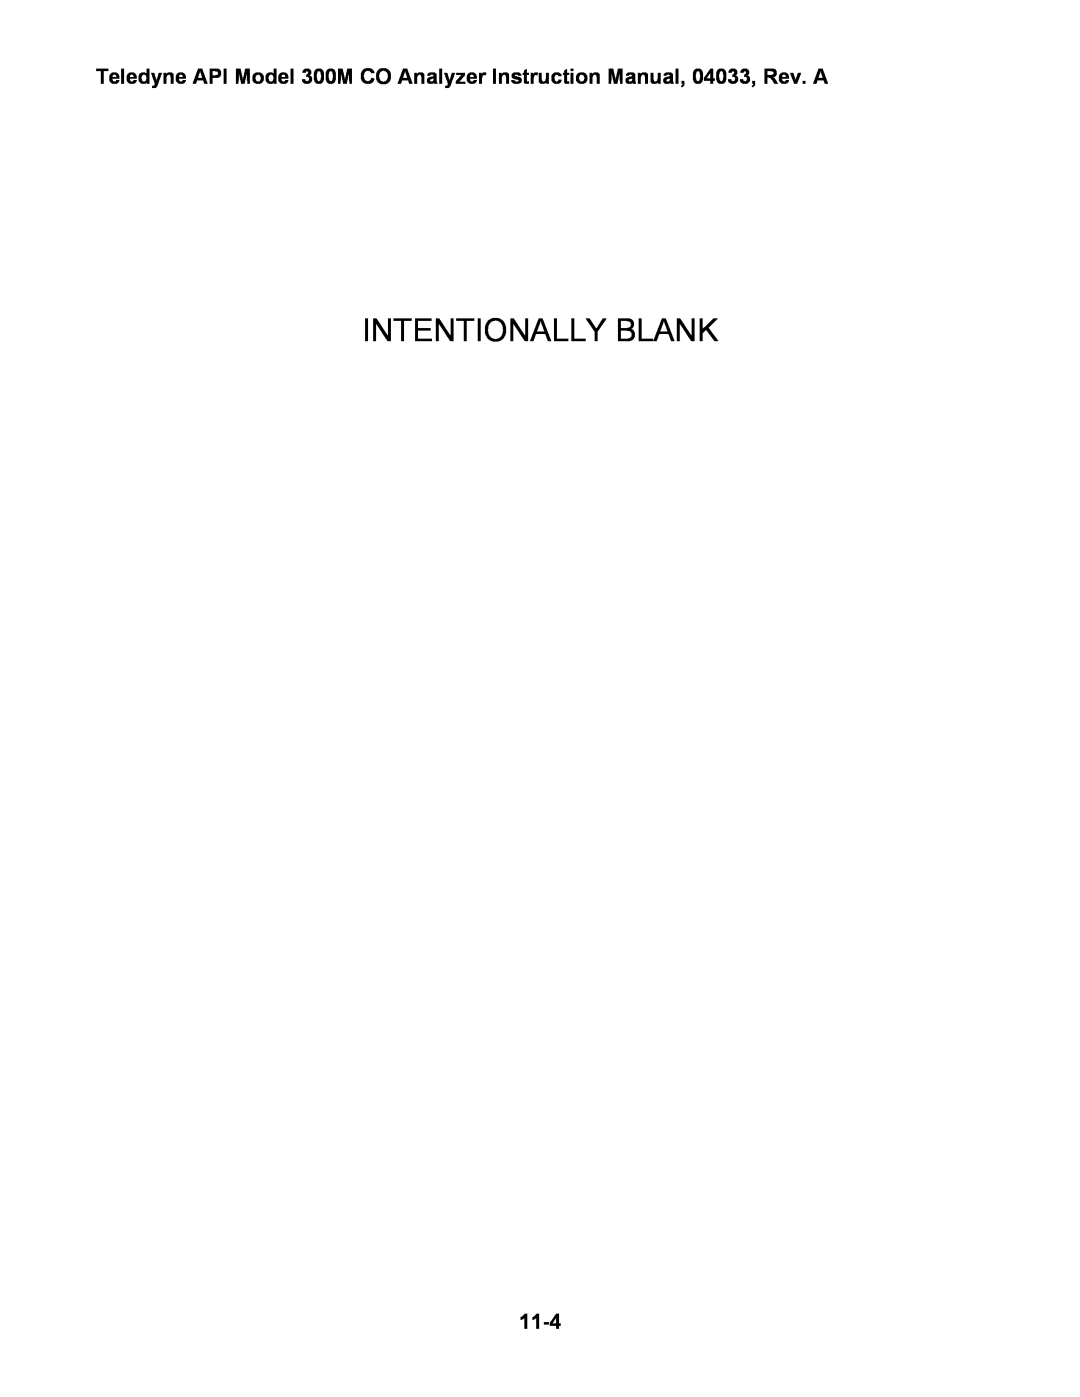 Teledyne 300M instruction manual 11-4, Intentionally Blank 